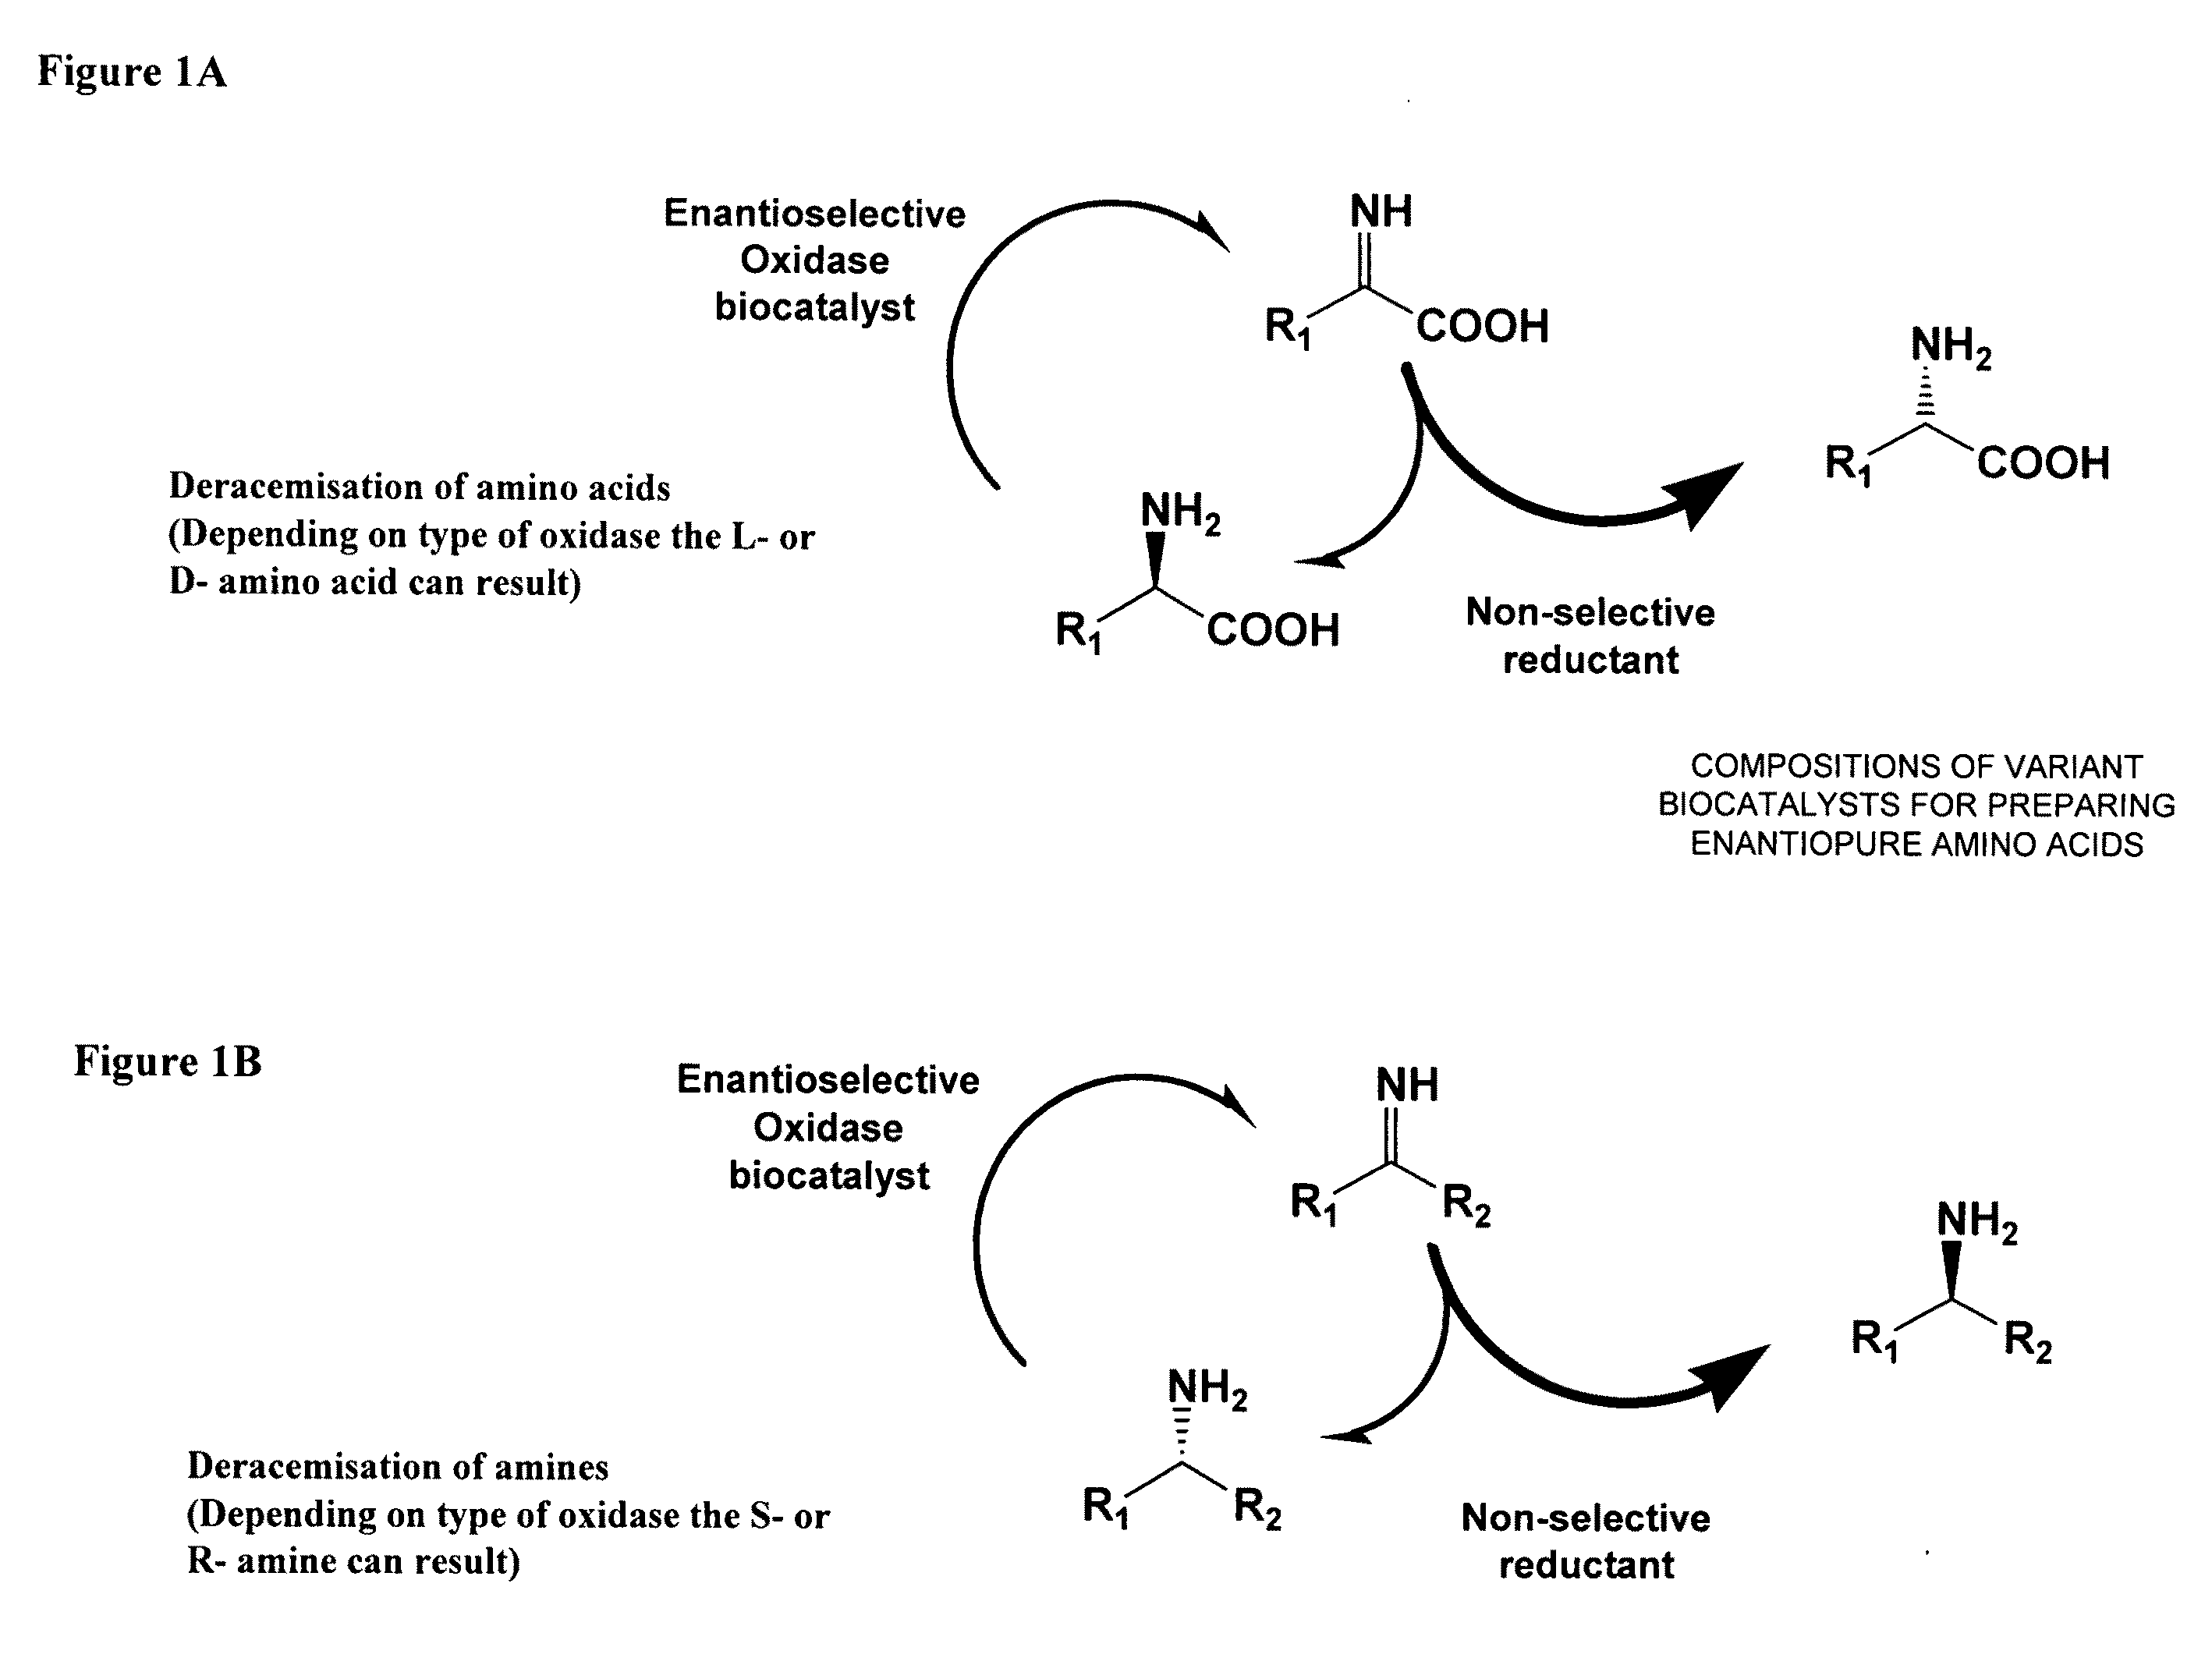 Compositions of variant biocatalysts for preparing enantiopure amino acids